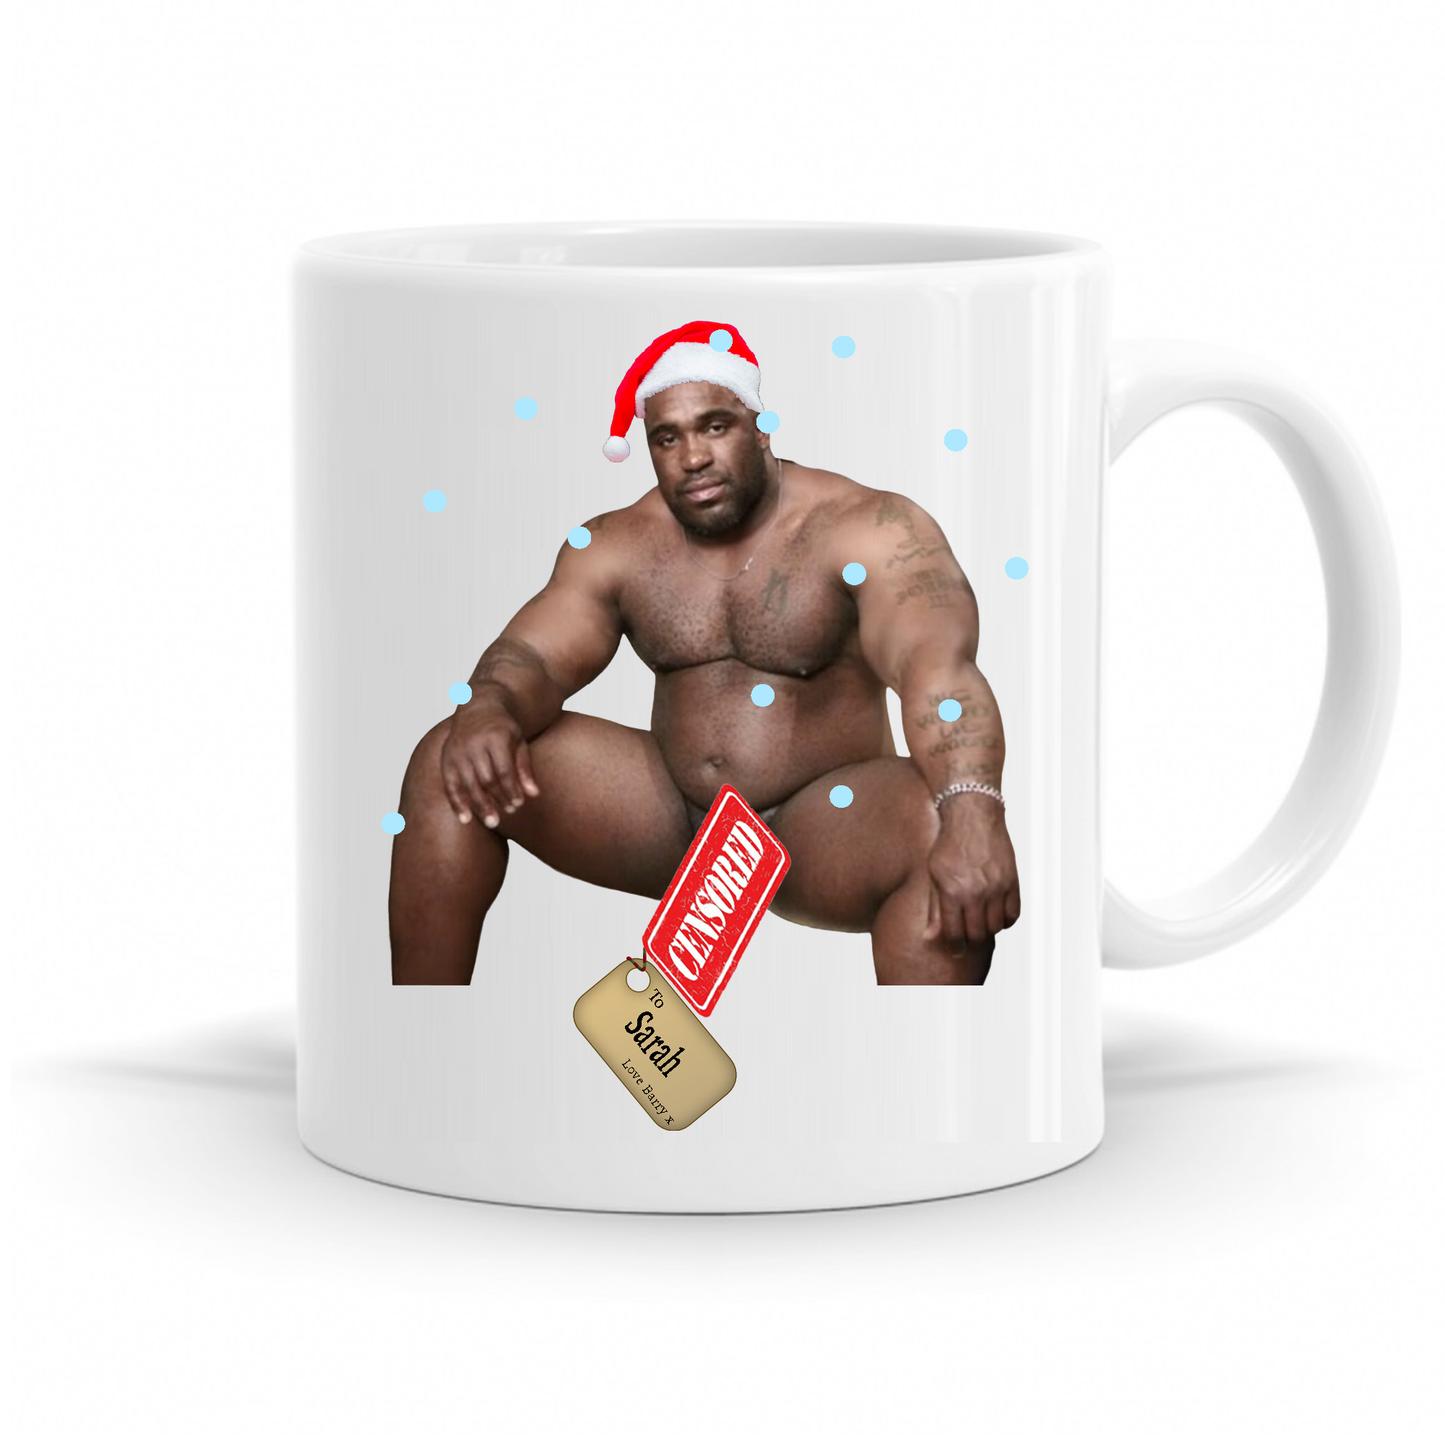 Barry Wood Meme Mug with Personalised Christmas tag.